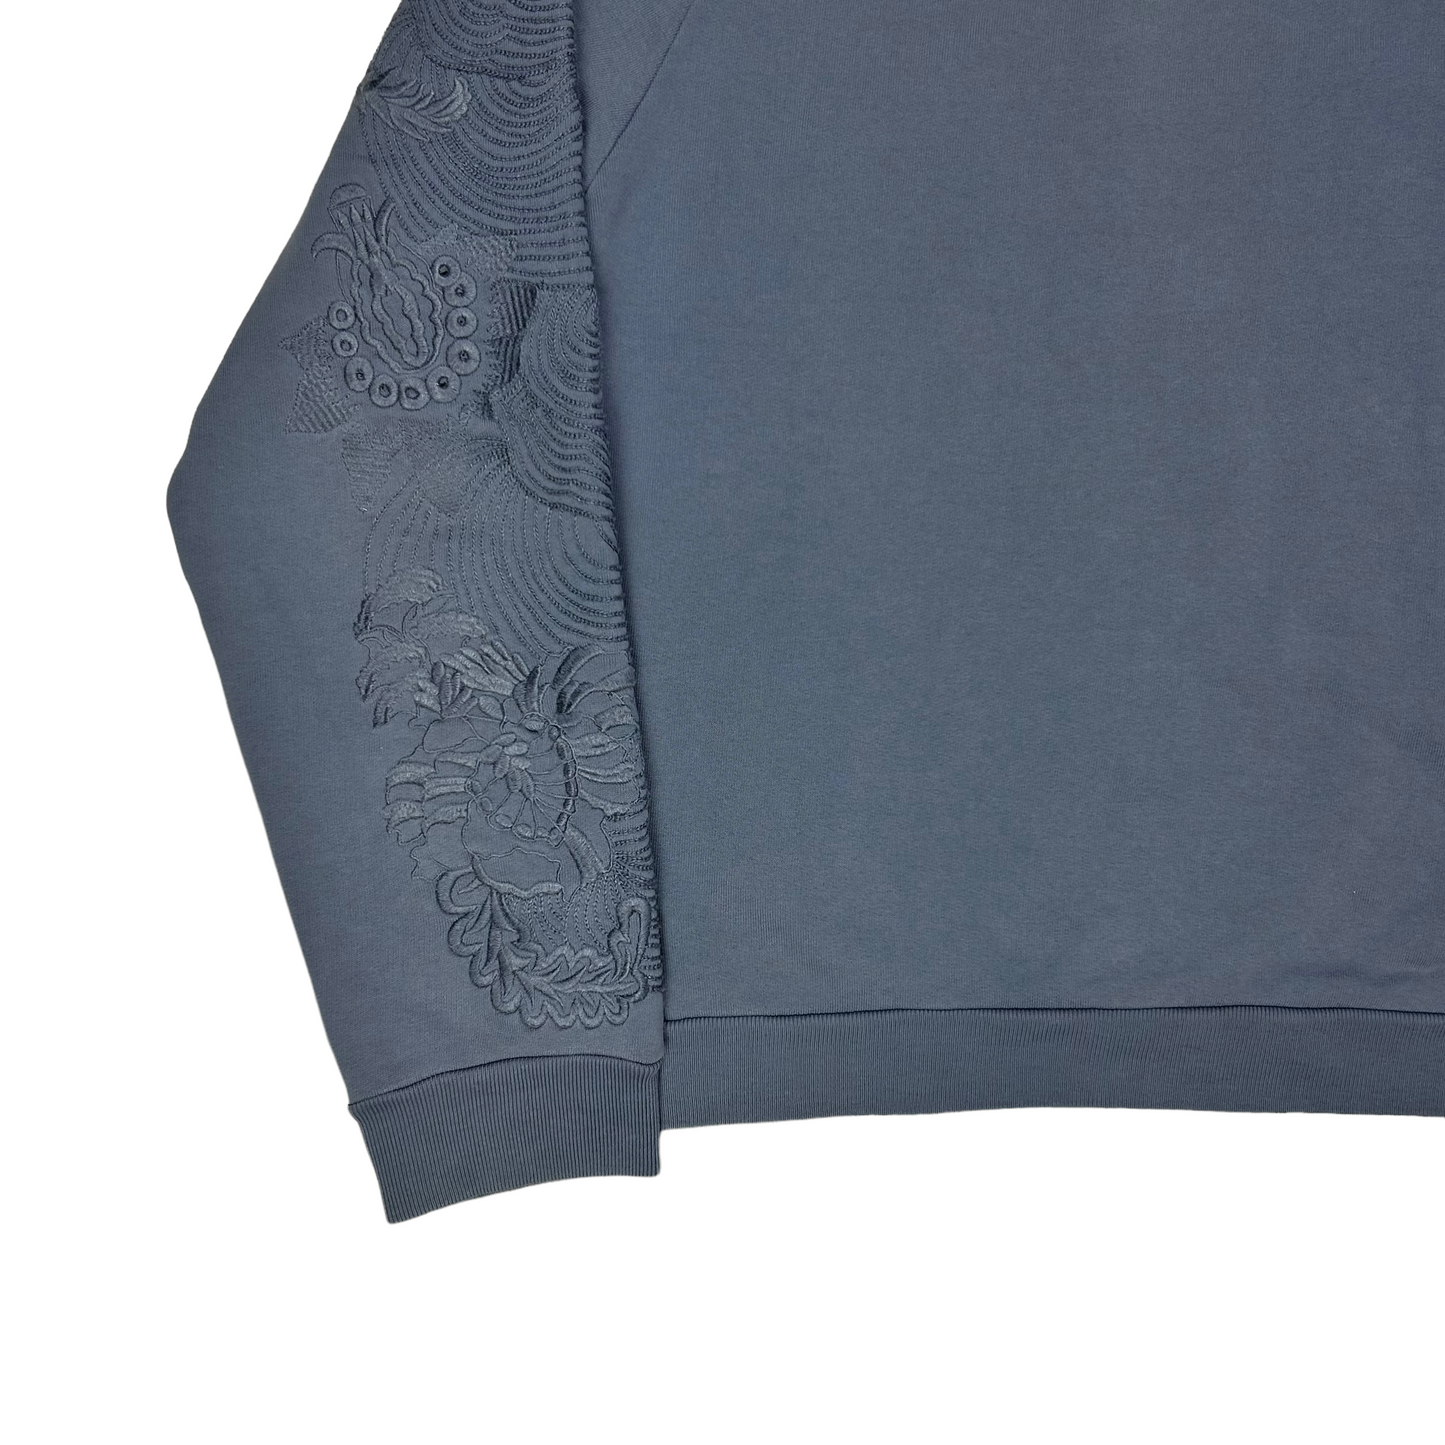 Dries Van Noten Sleeve Embroidery Sweater - SS18